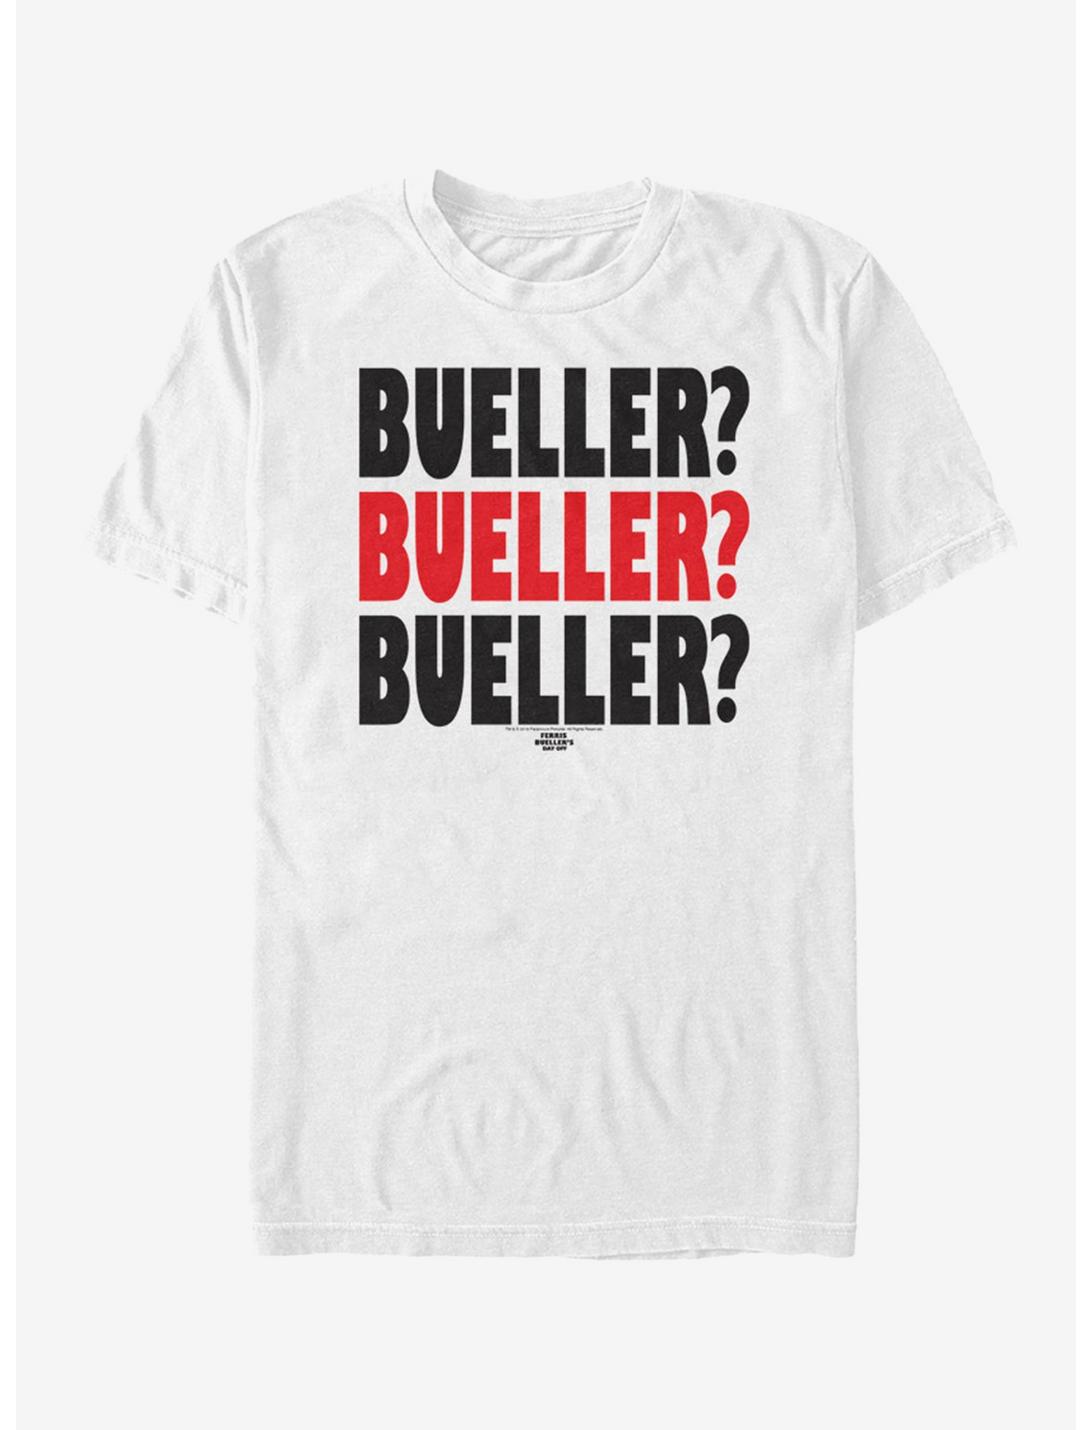 Ferris Bueller's Day Off Bueller Bueller Bueller T-Shirt, WHITE, hi-res